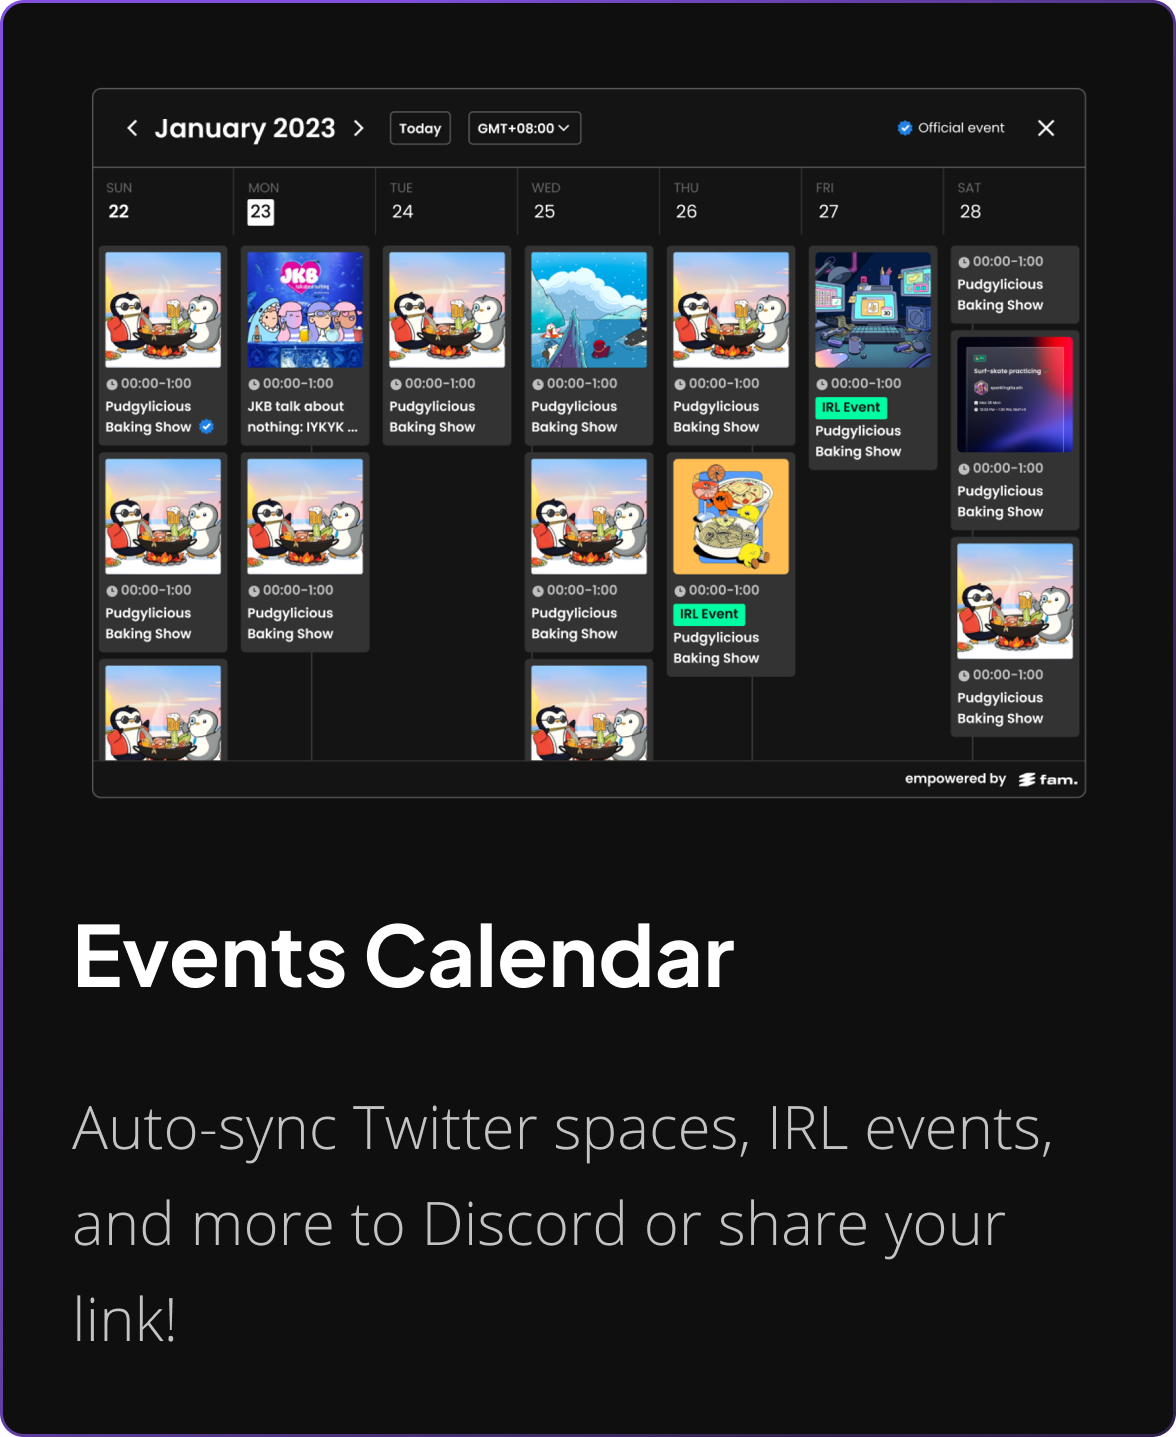 Fam's Events Calendar